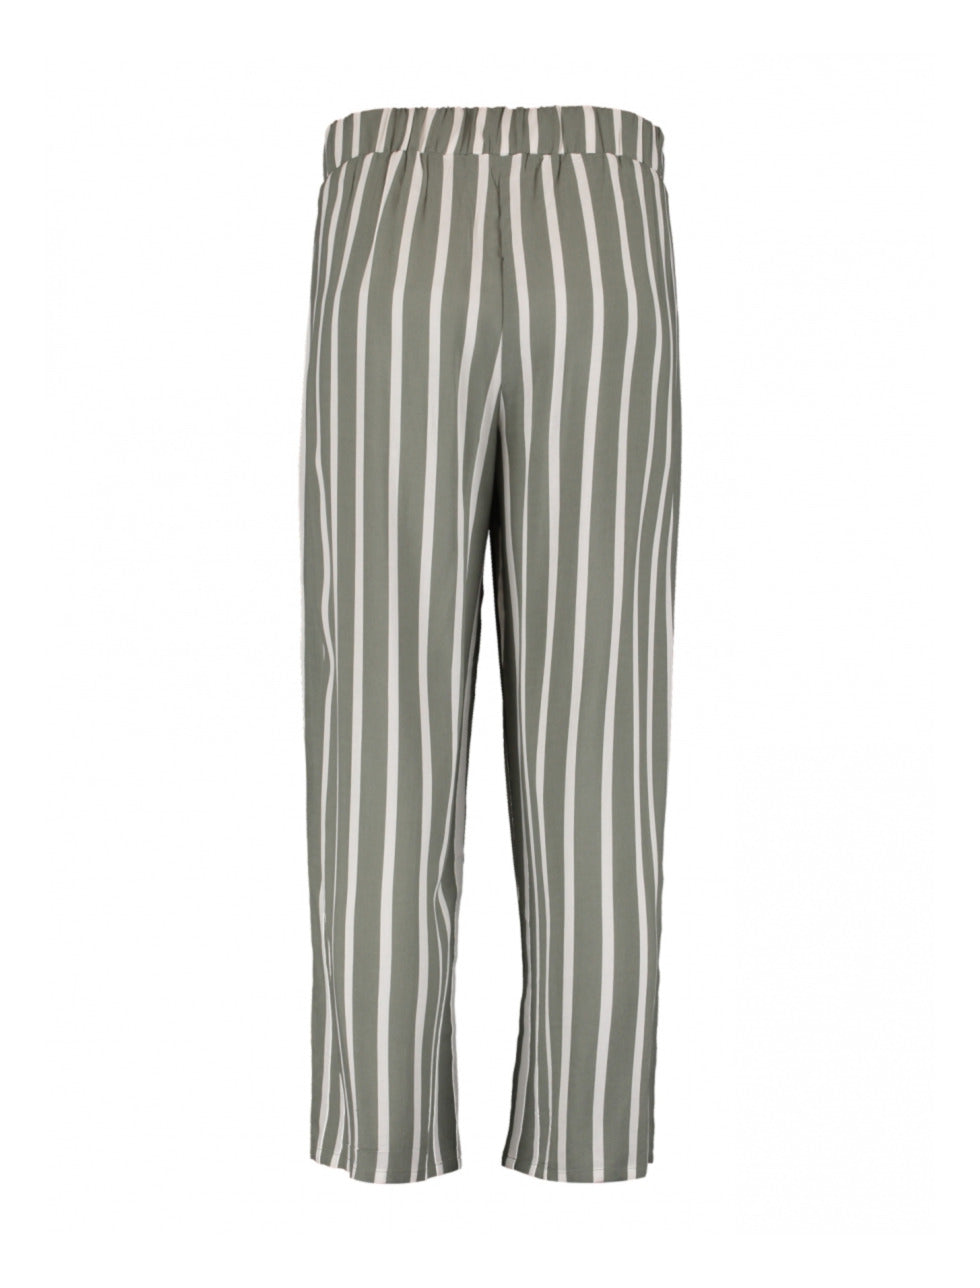 Cira Khaki White Stripe Trousers